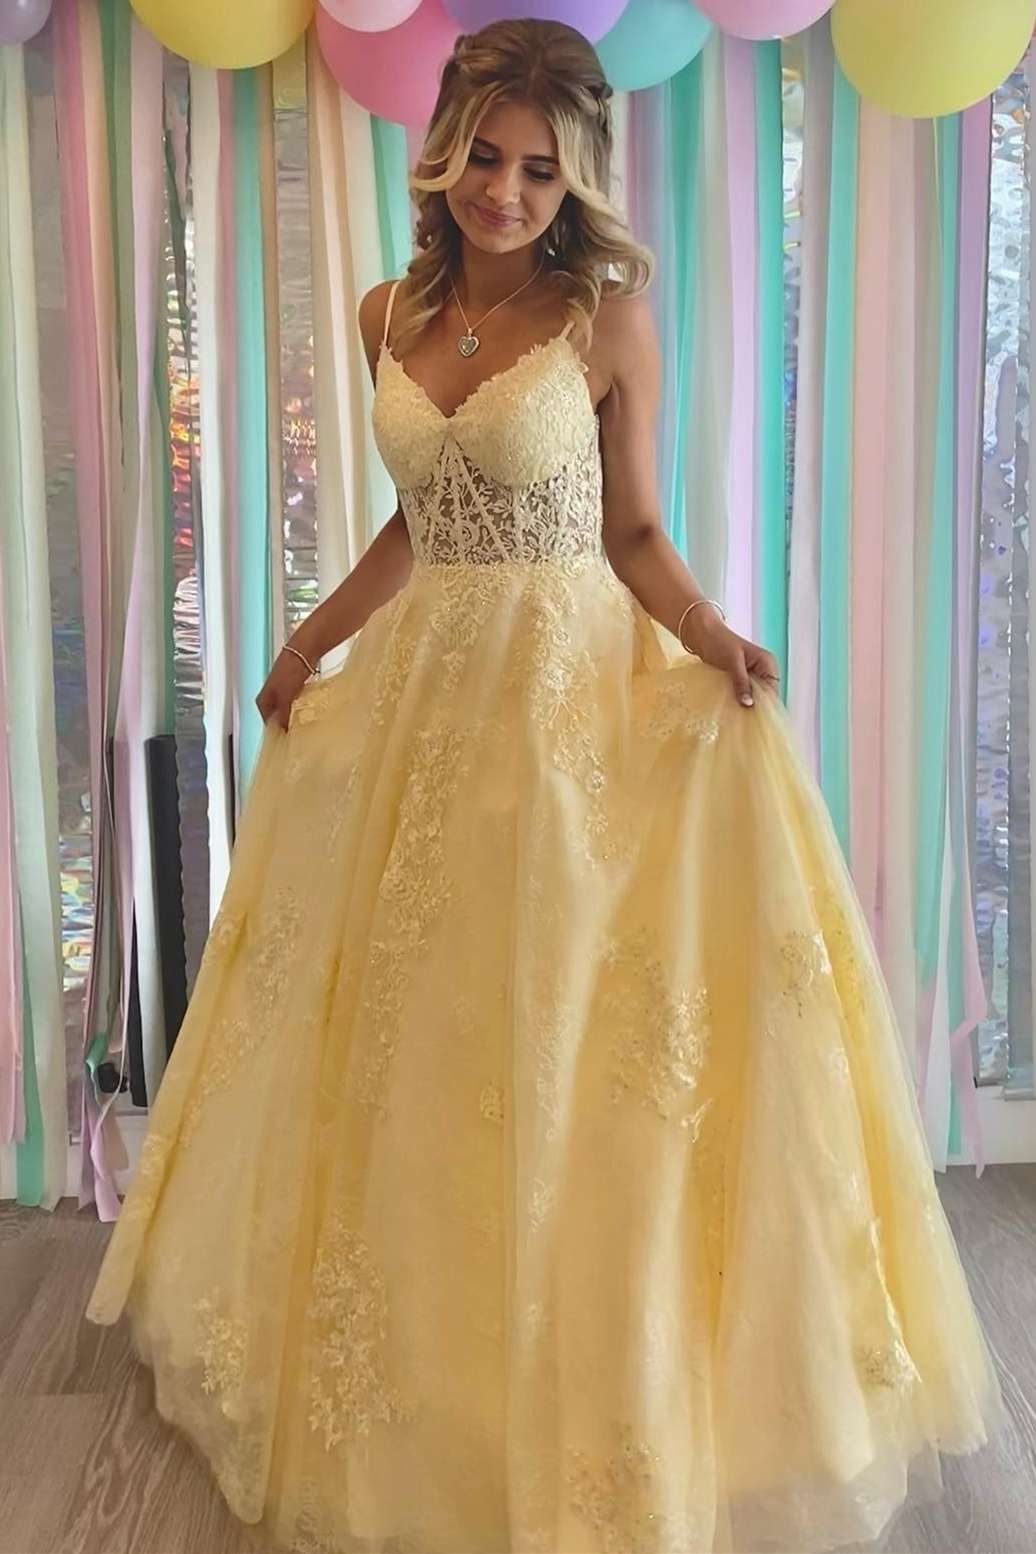 Disney Princess Belle Yellow Dress Original by RockOutRebel on DeviantArt